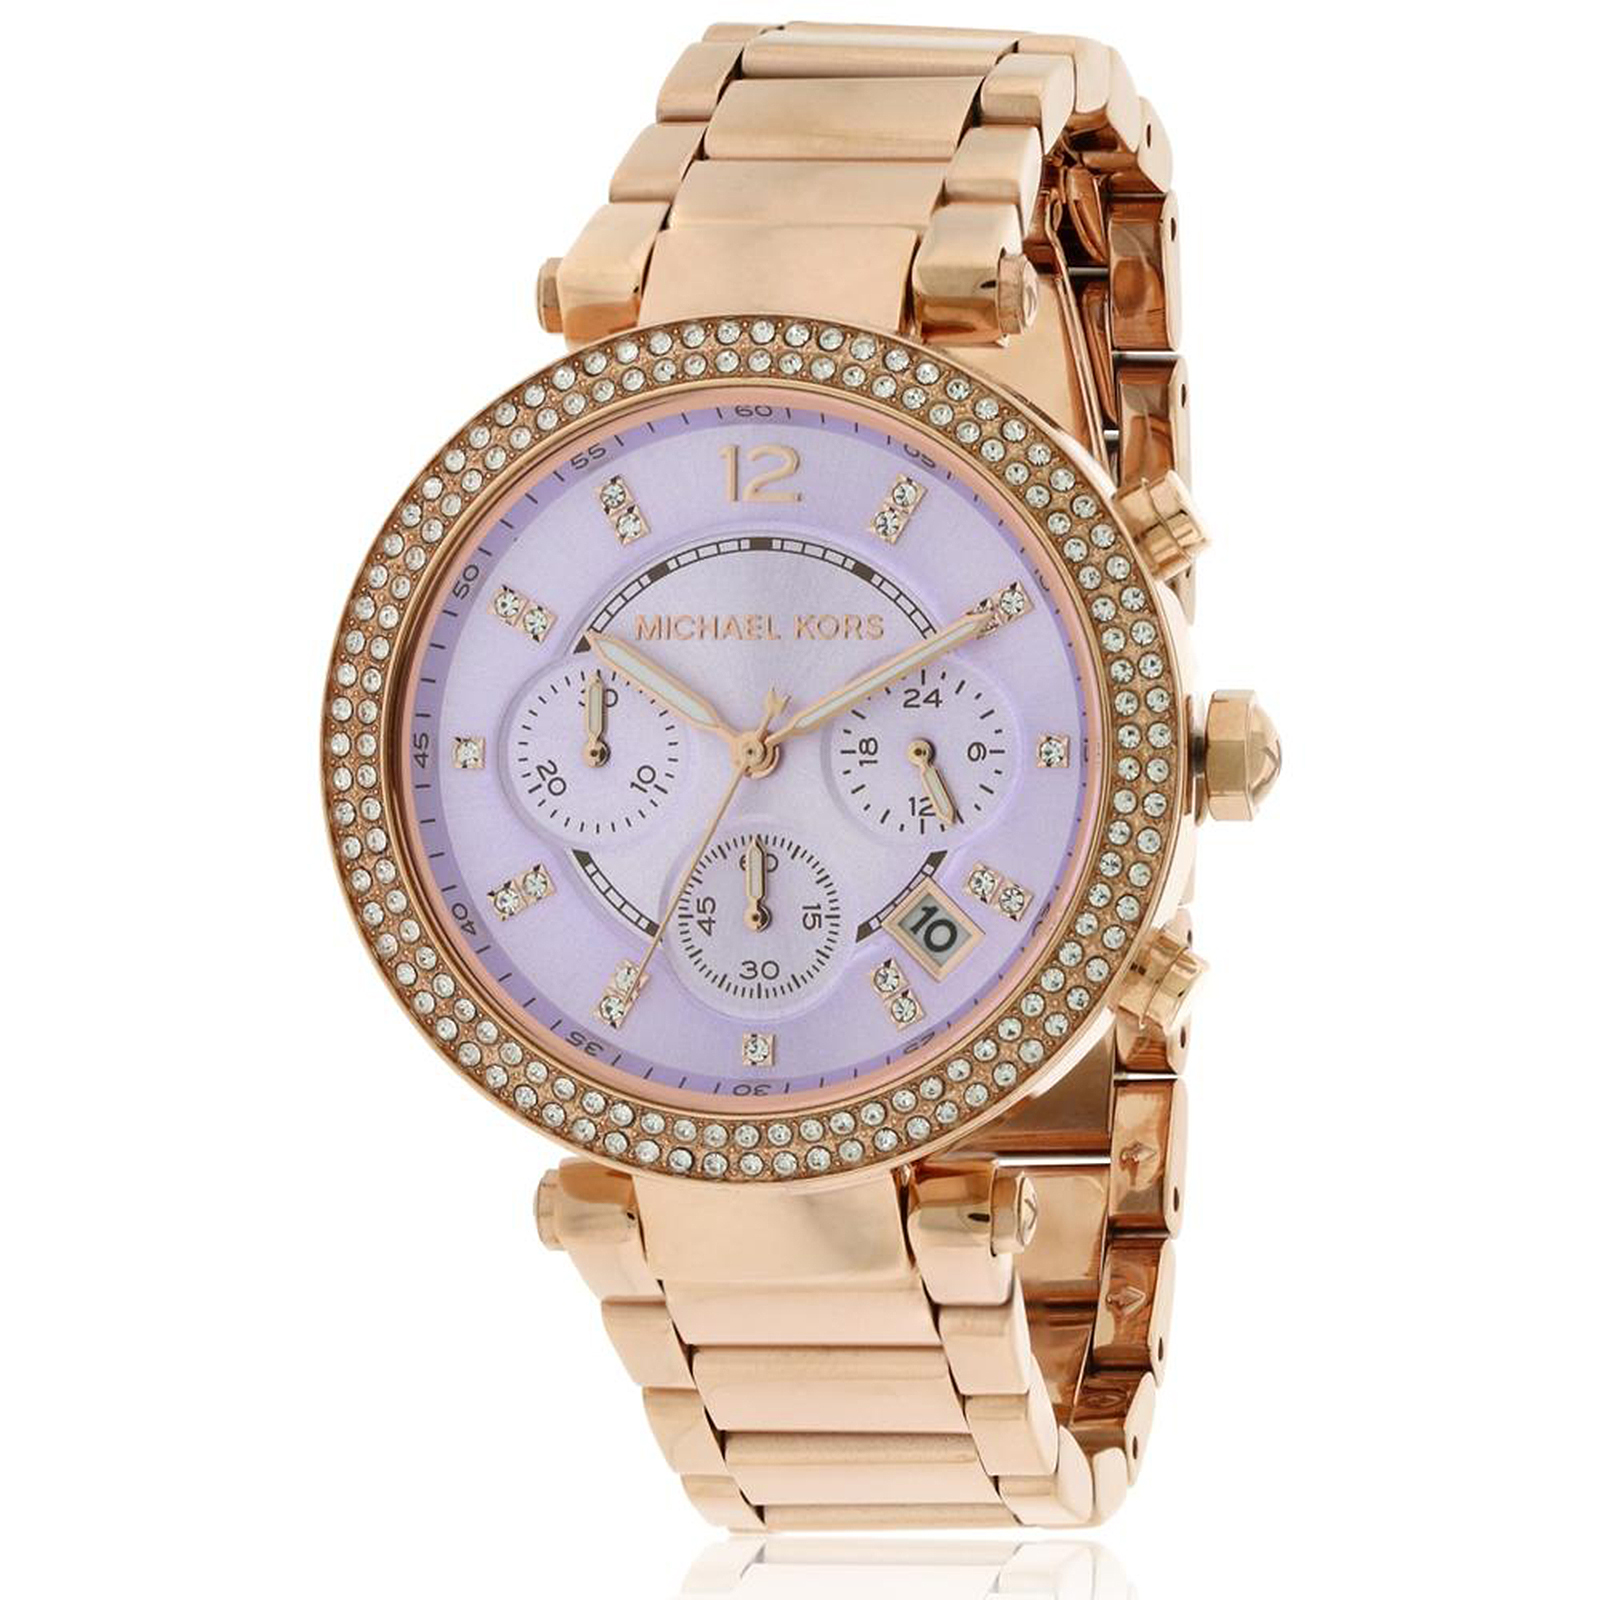 Michael Kors MK5491 Women’s Parker Stainless Steel Watch - Rose Gold